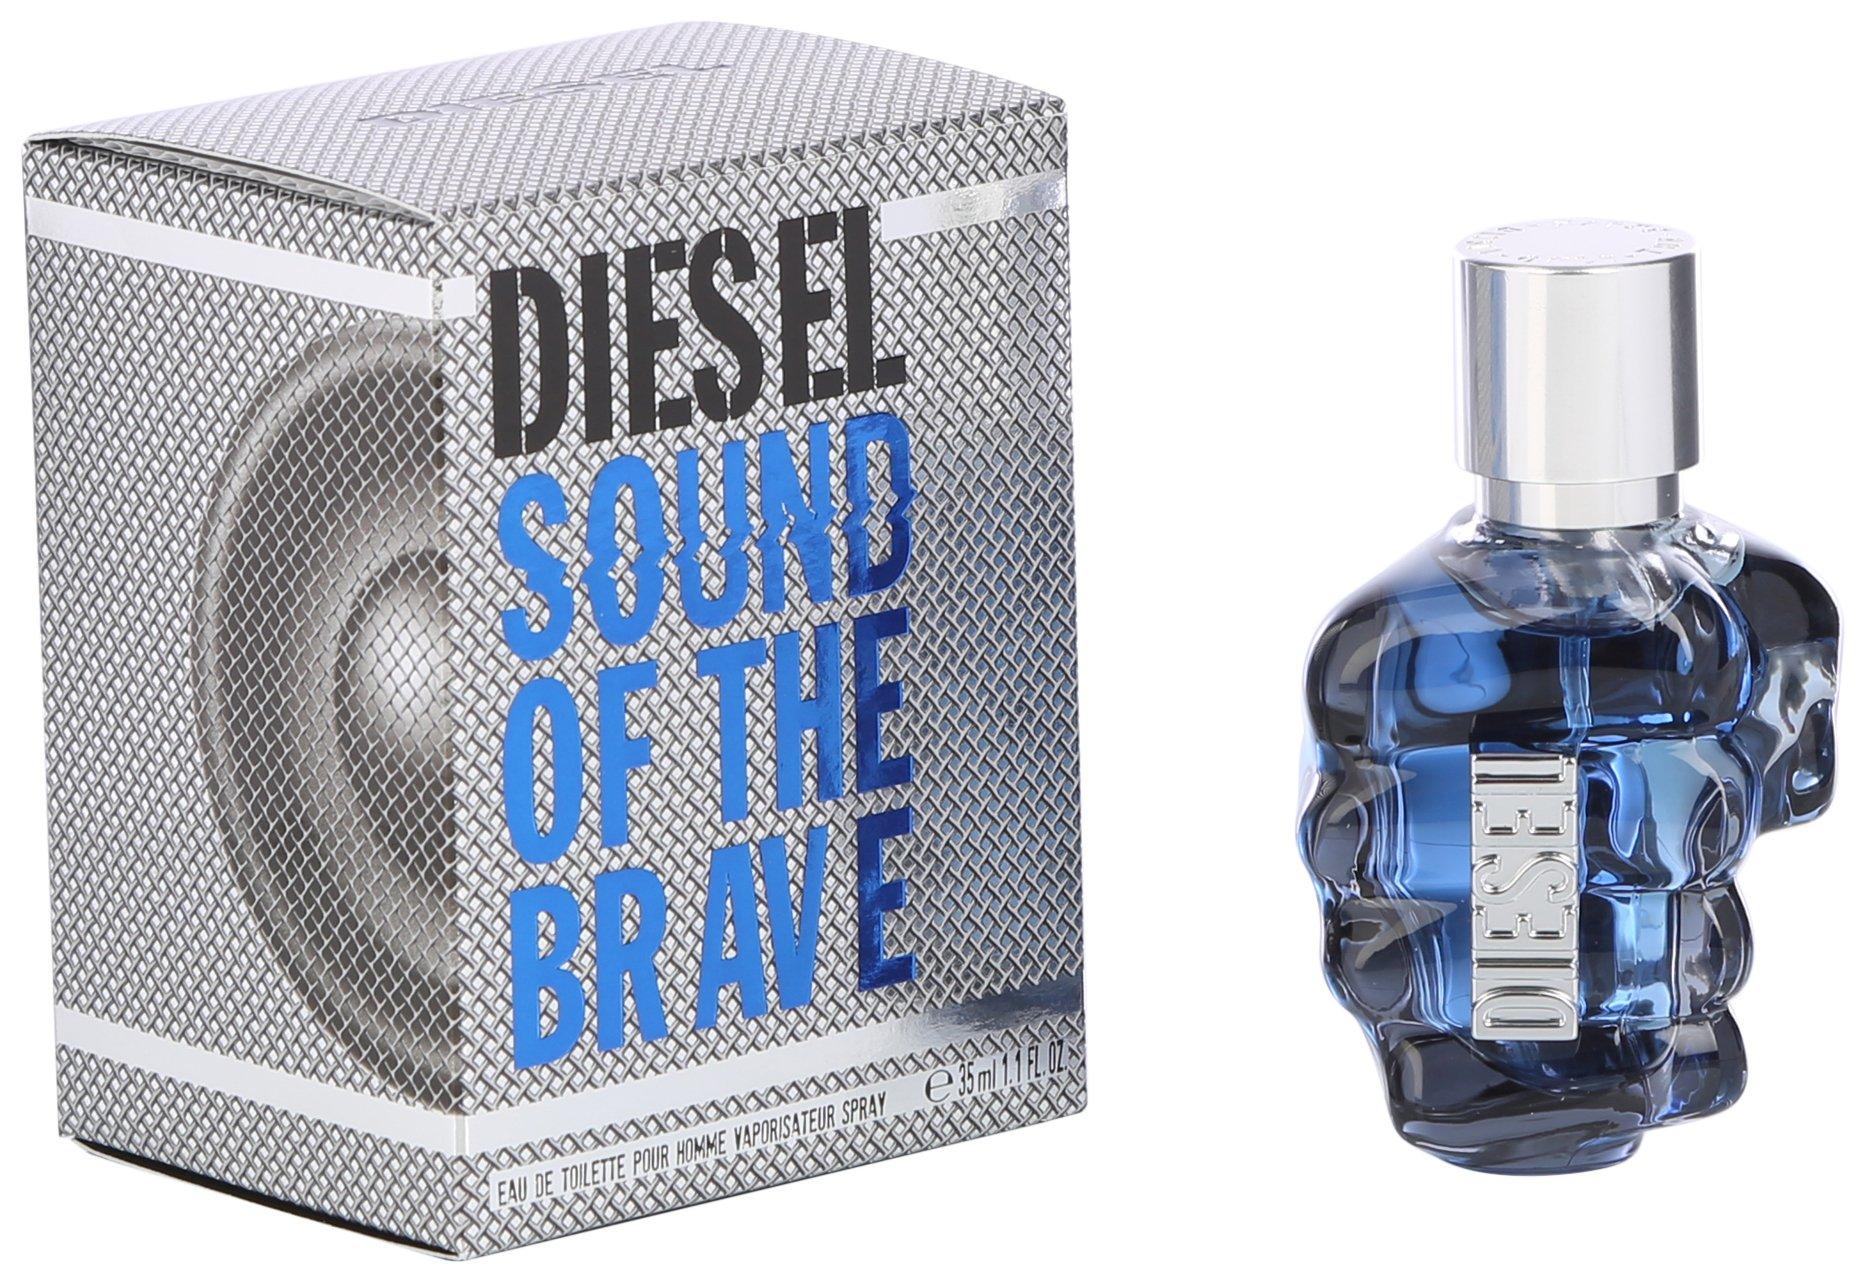 Diesel Mens 1.1 Fl.Oz. Sound Of The Brave EDT Spray